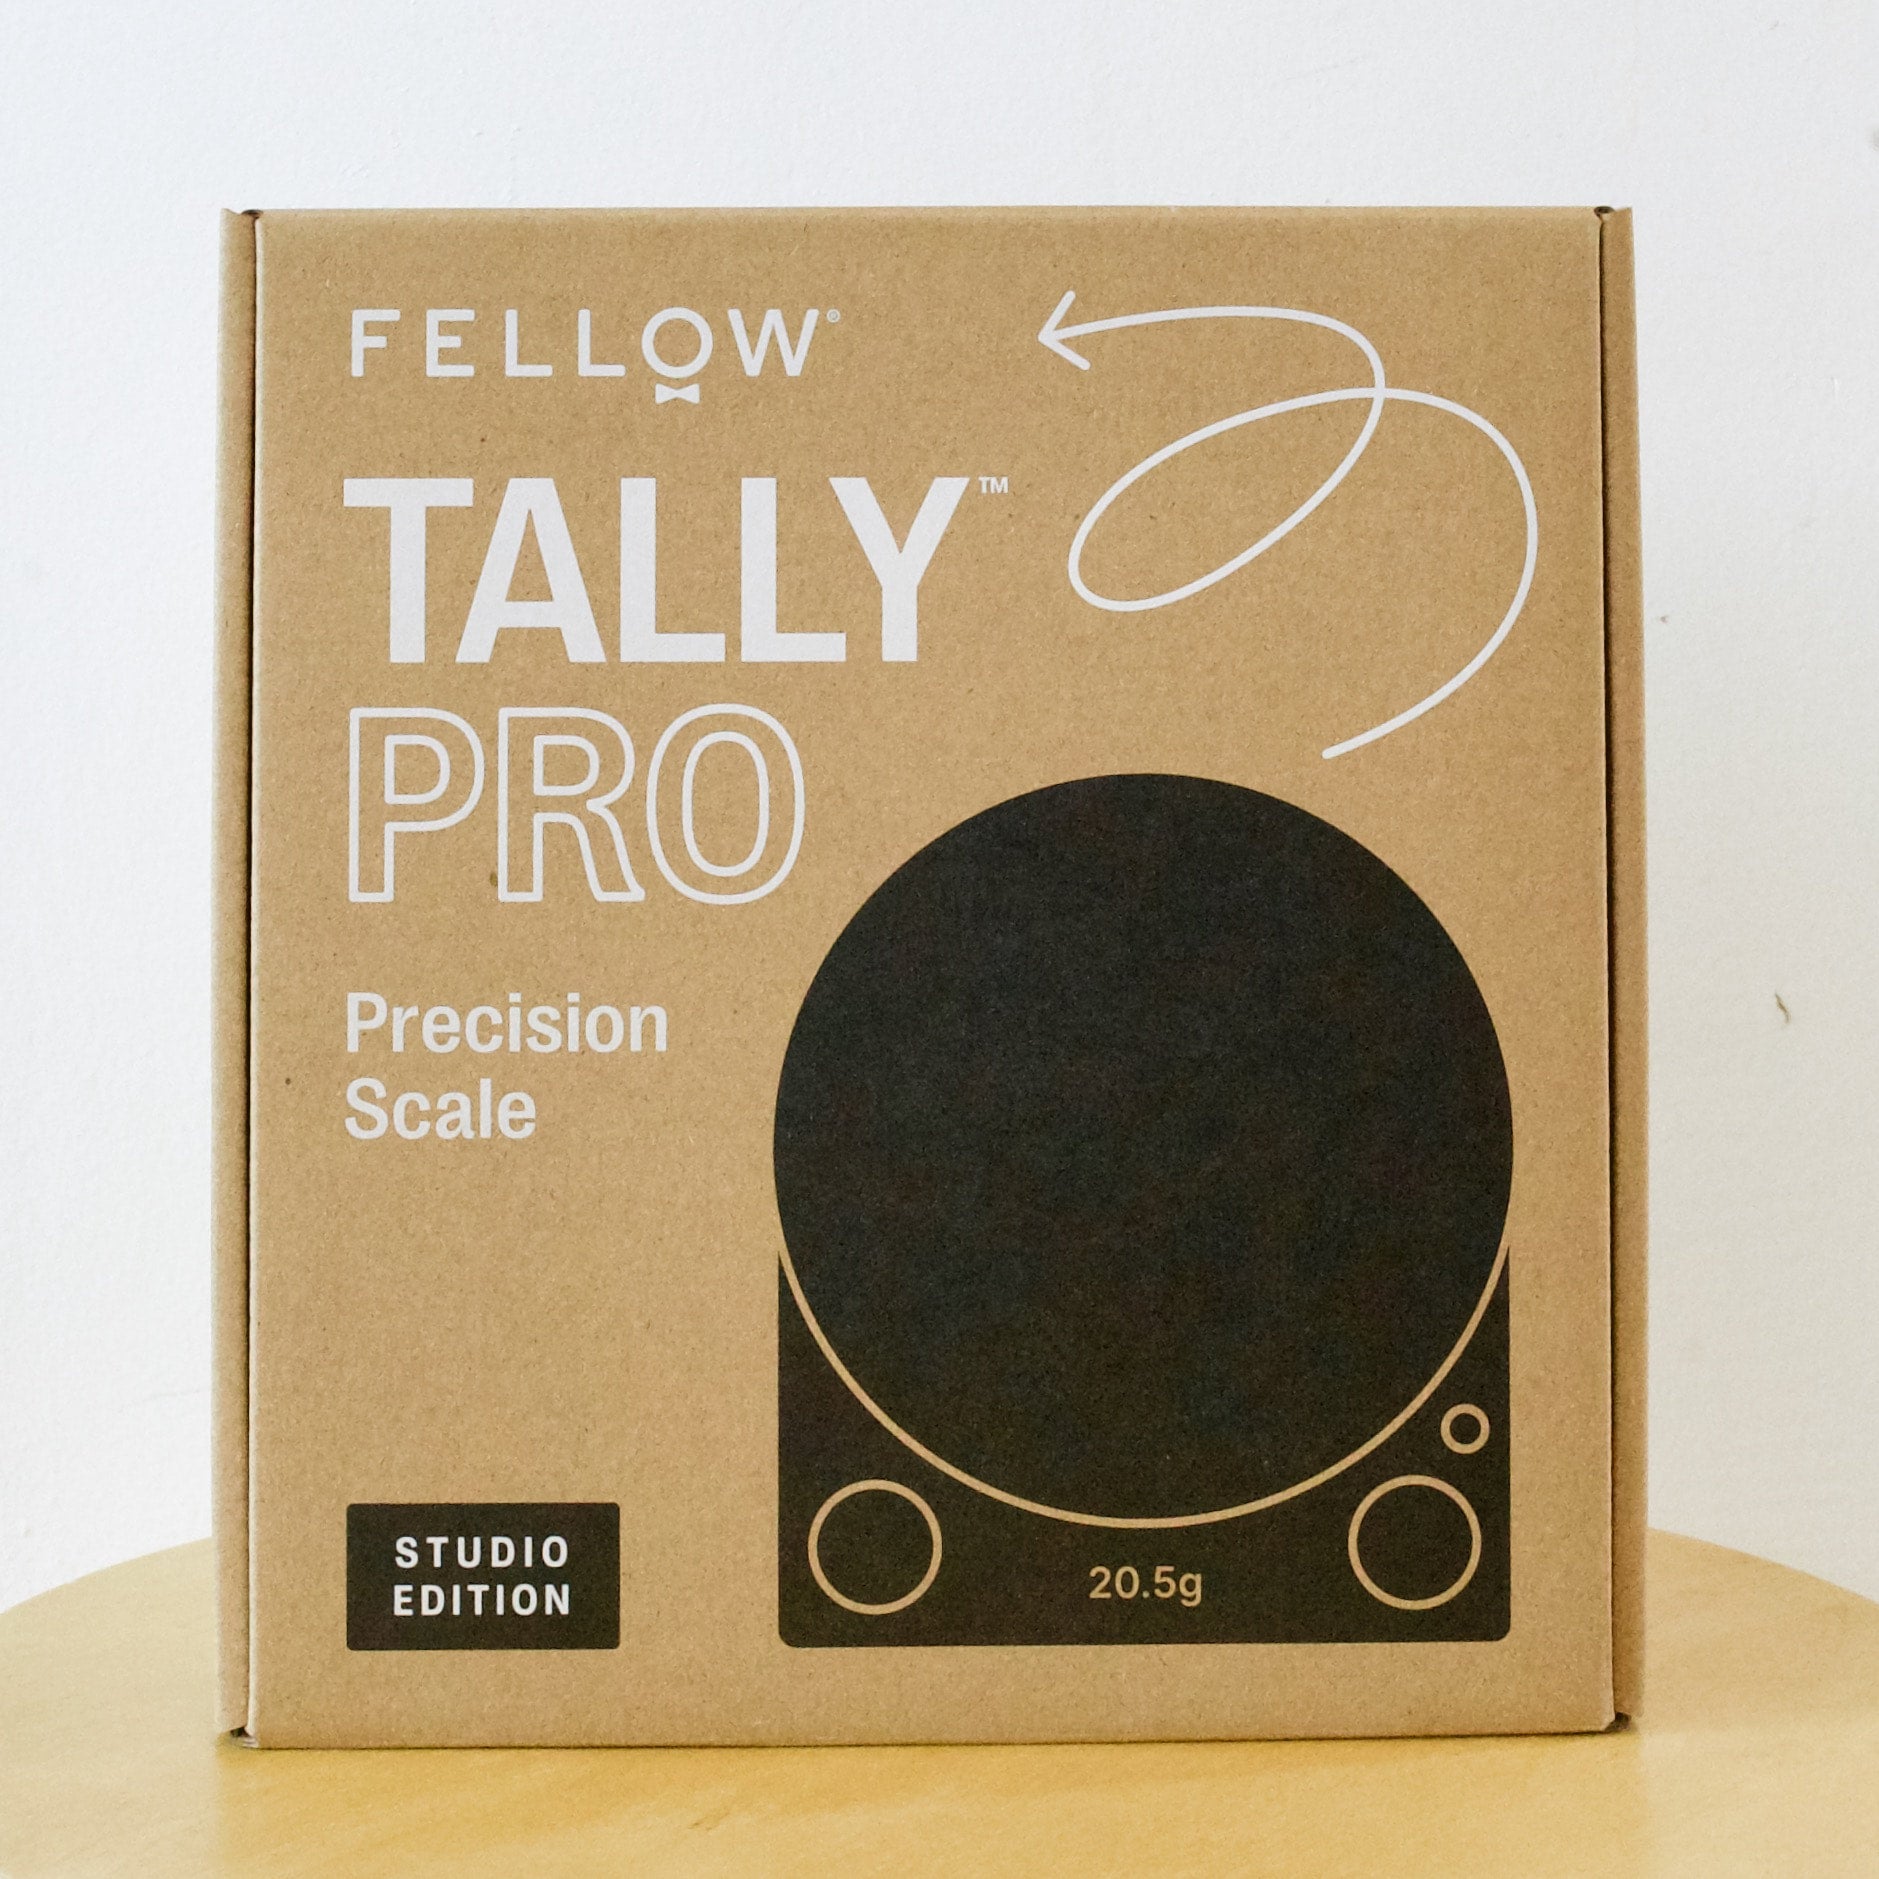 Fellow Tally pro - Precision Scale